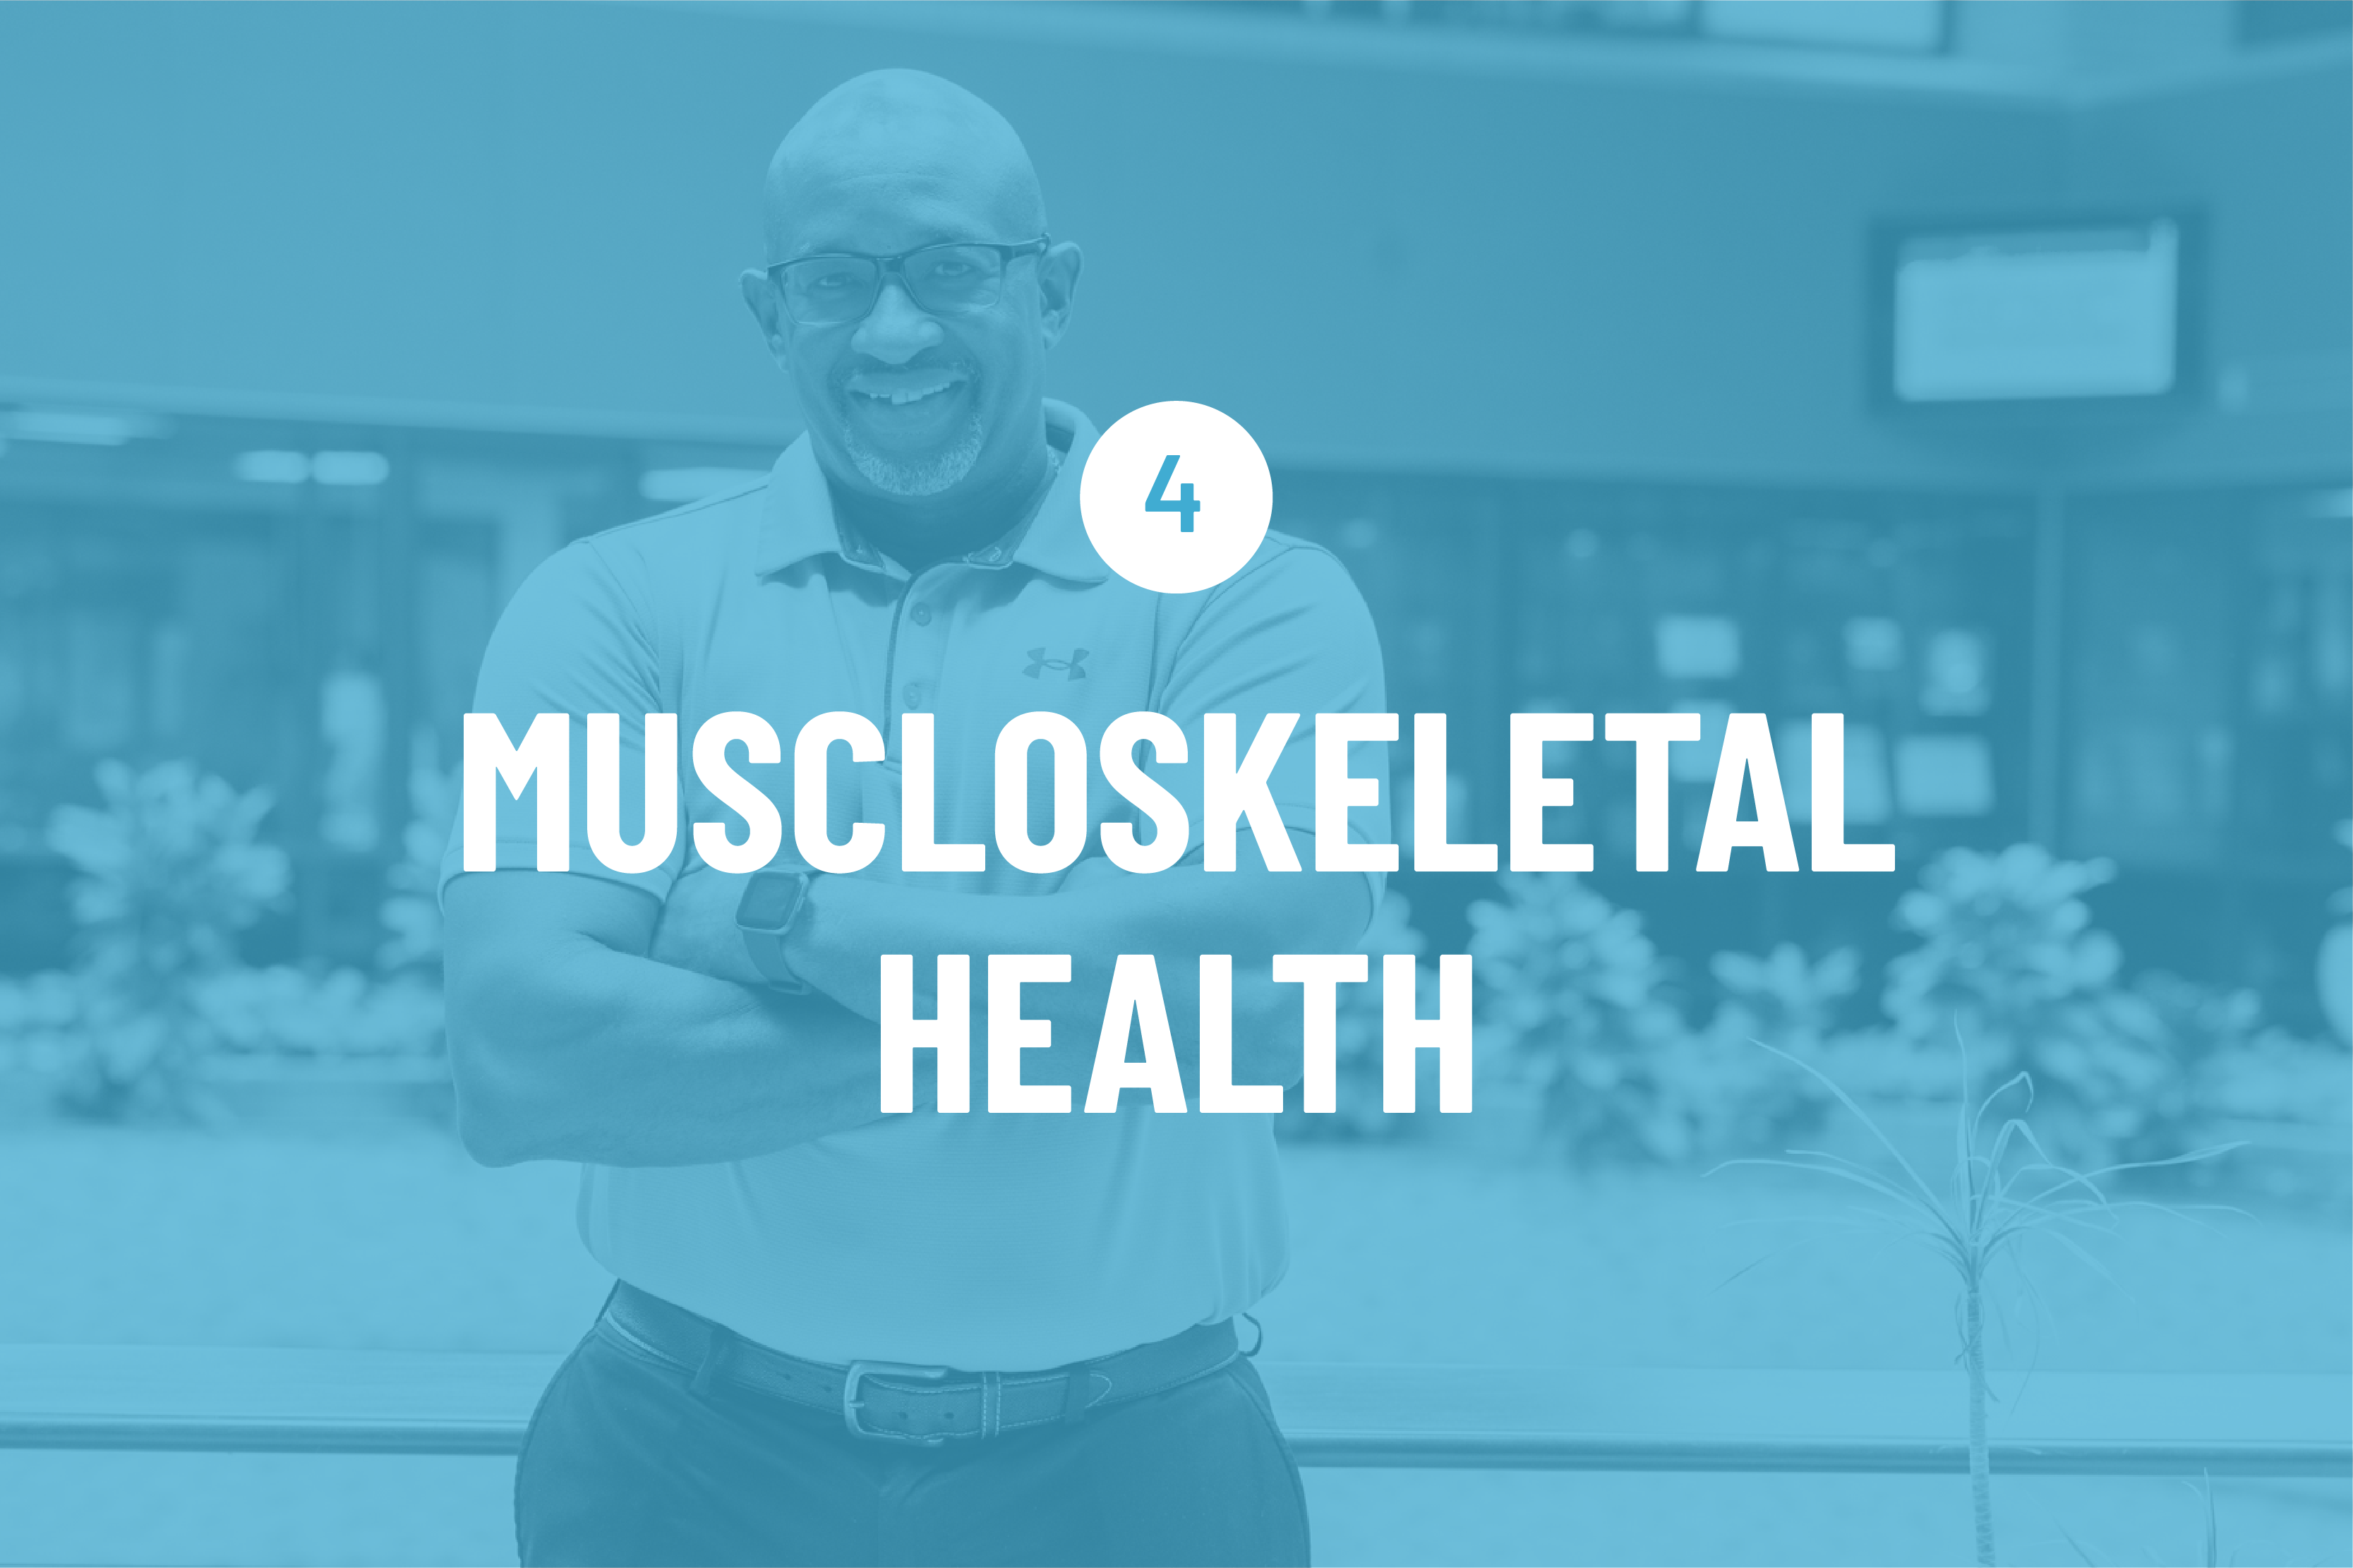 4 - Muscloskeletal Health